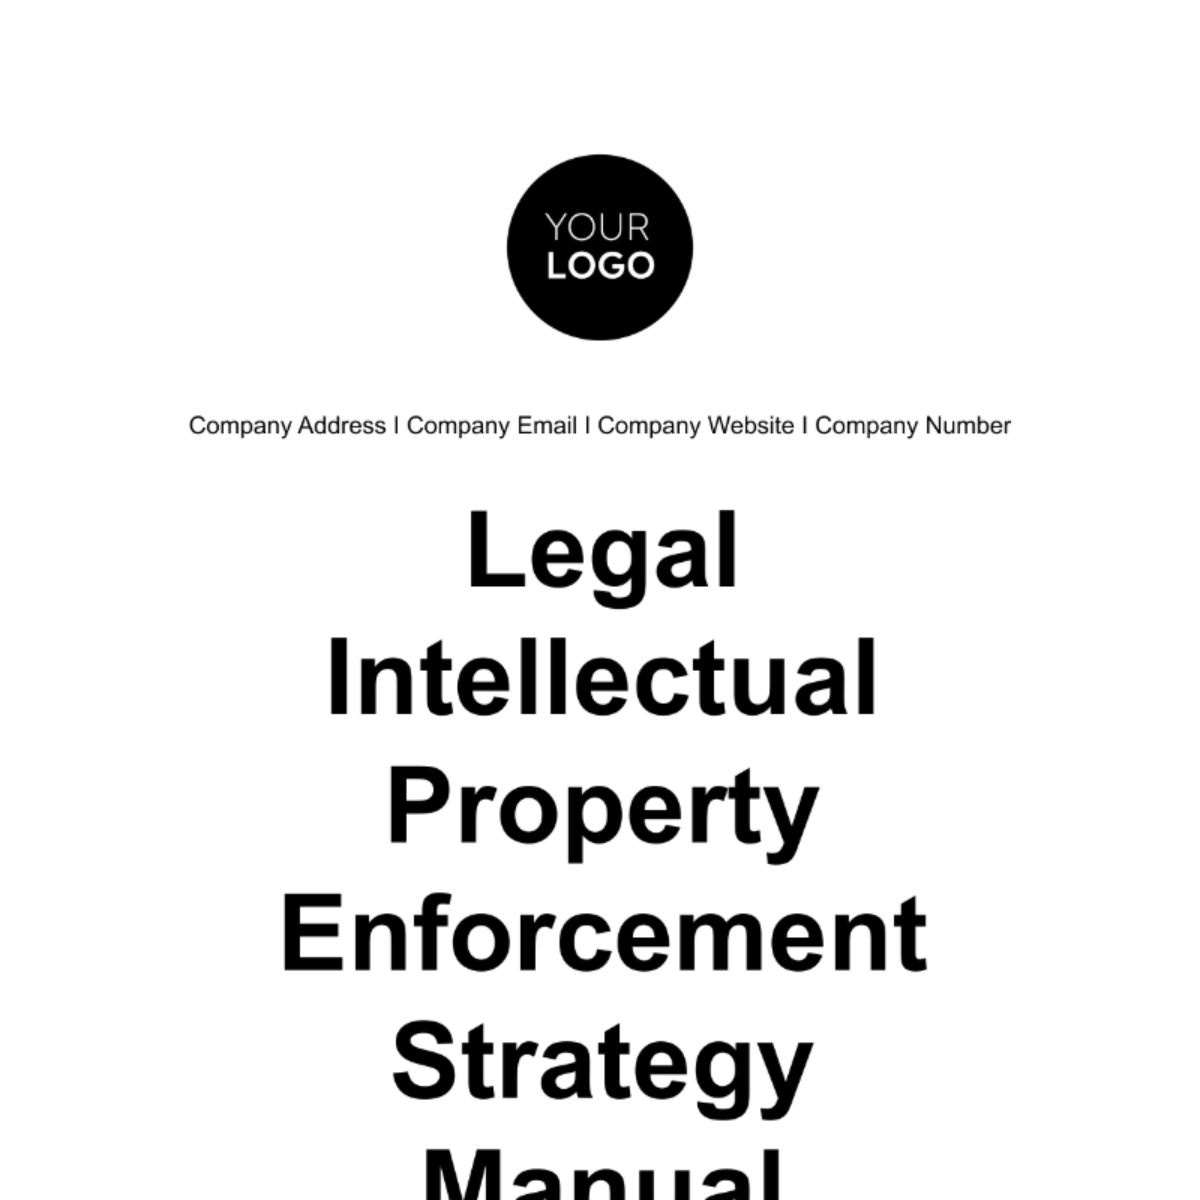 Legal Intellectual Property Enforcement Strategy Manual Template